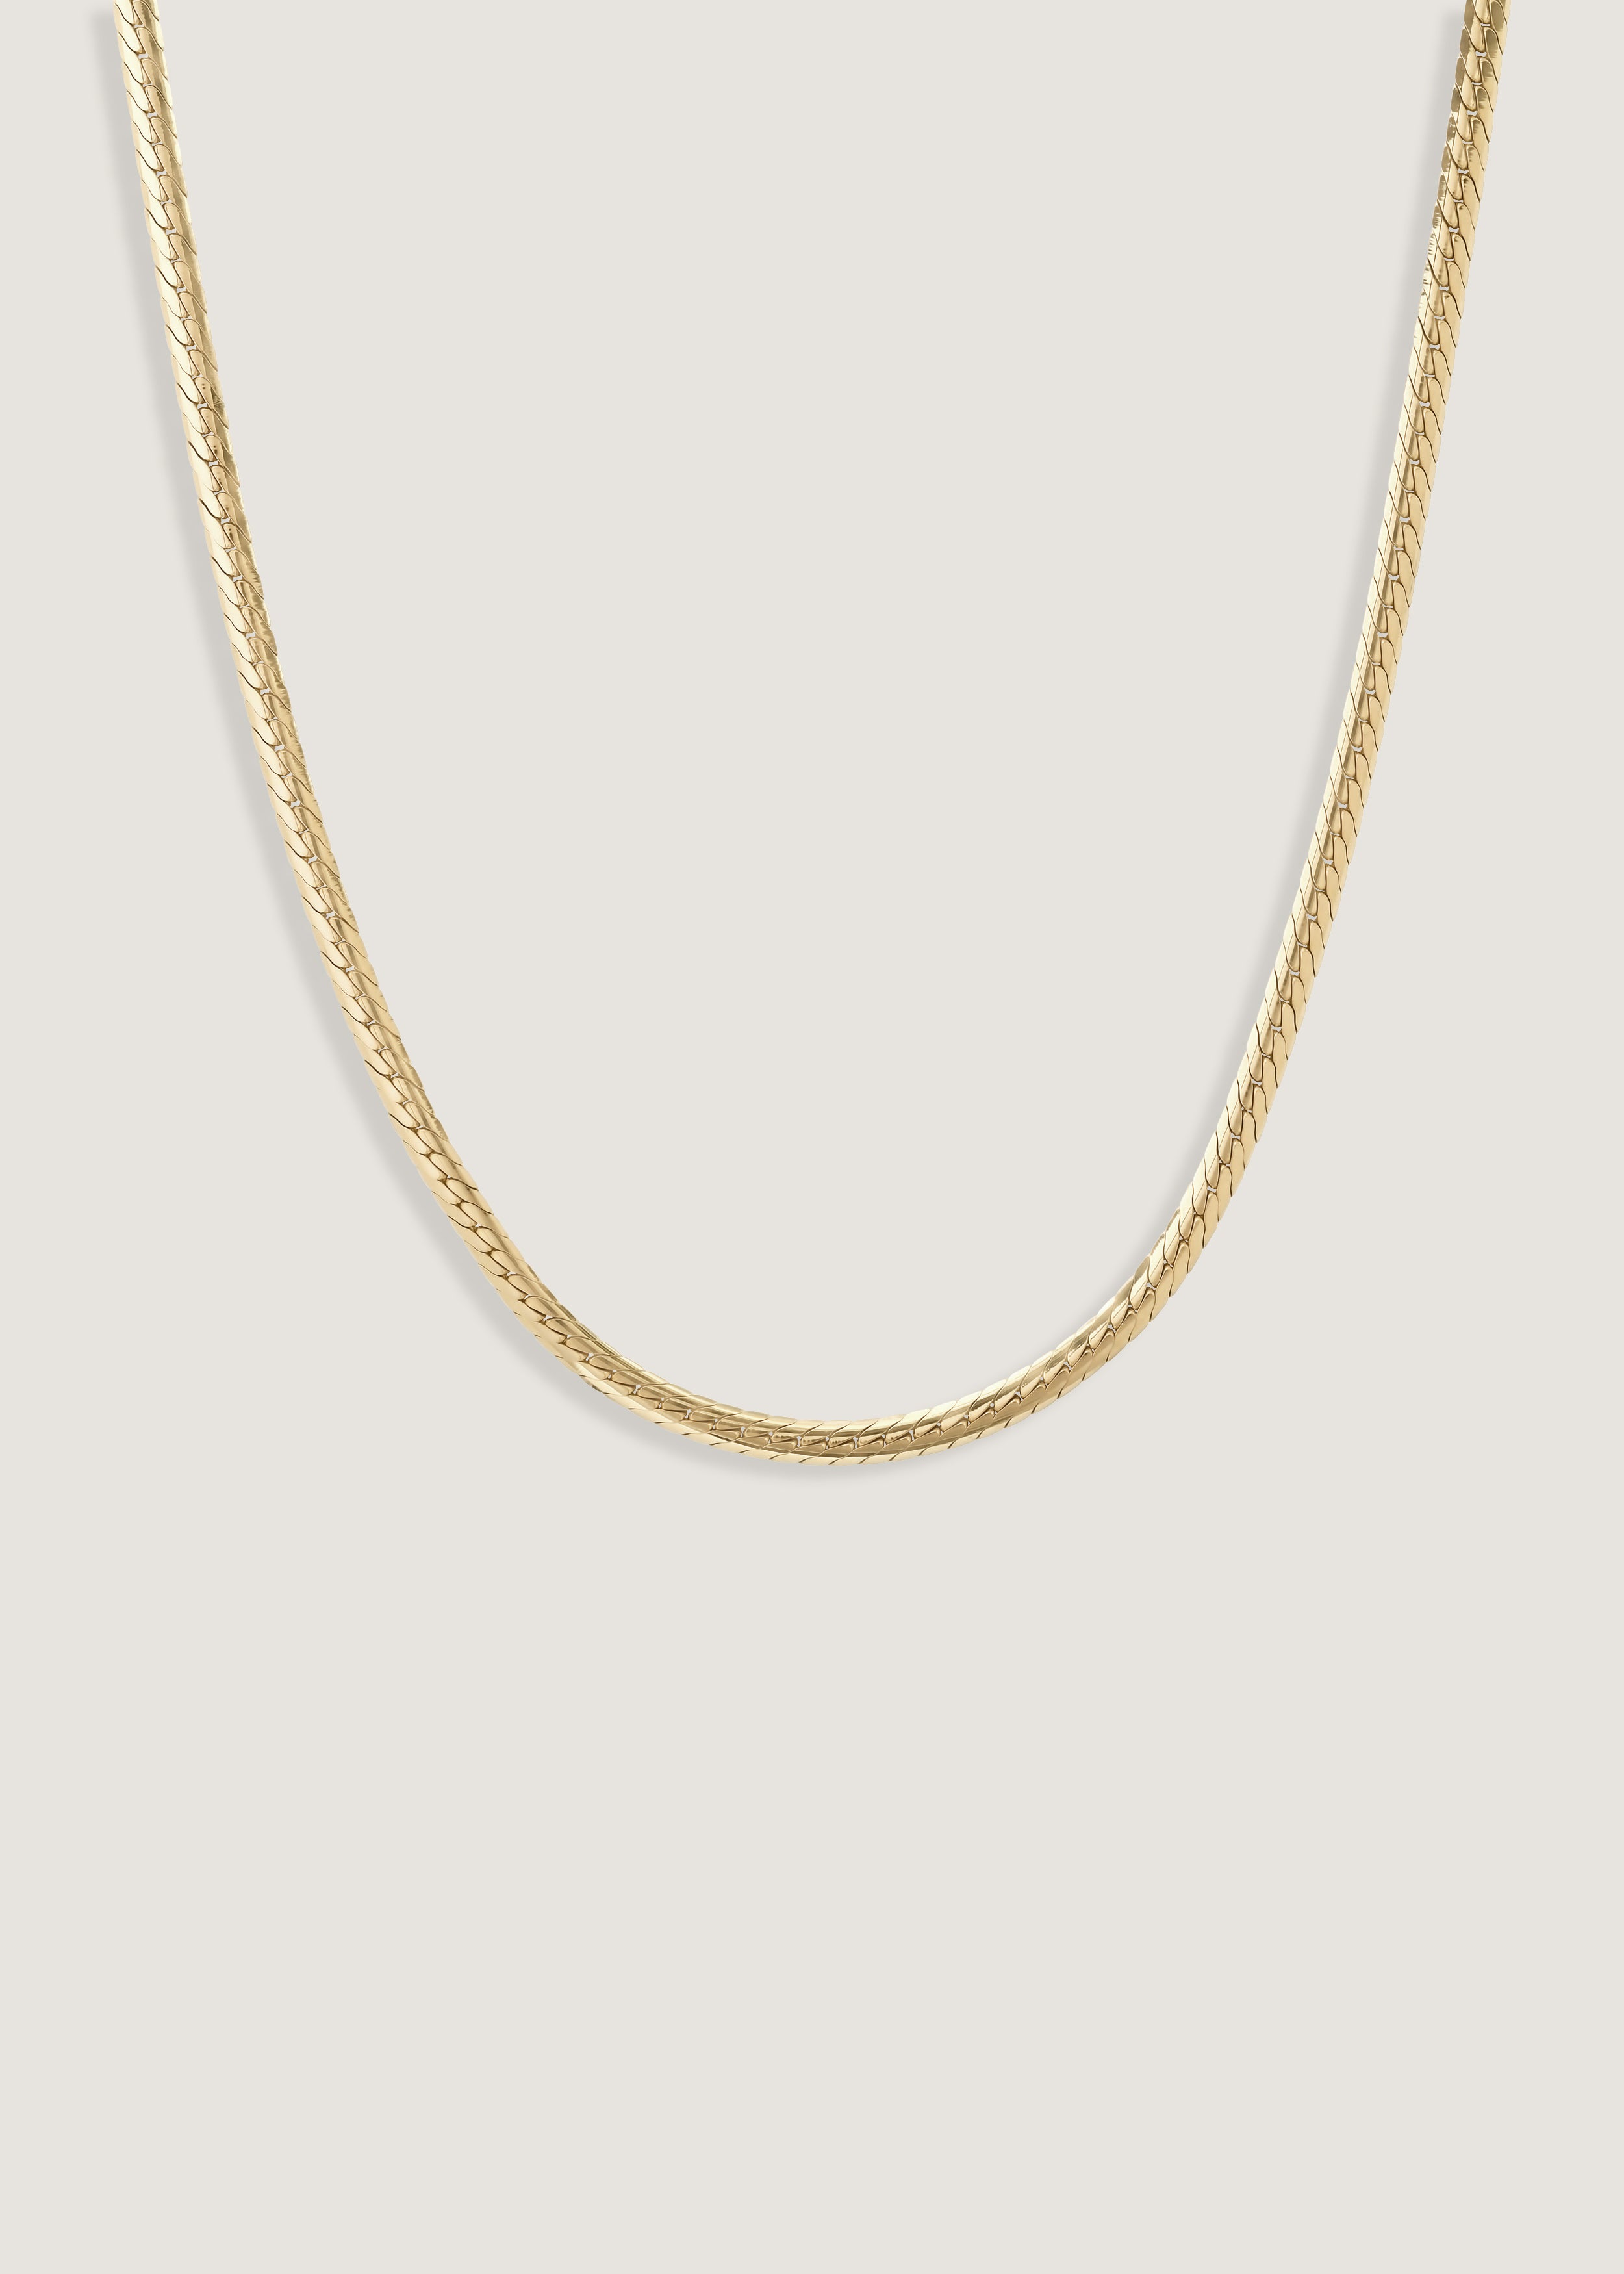 Petite Kennedy Herringbone Chain Necklace